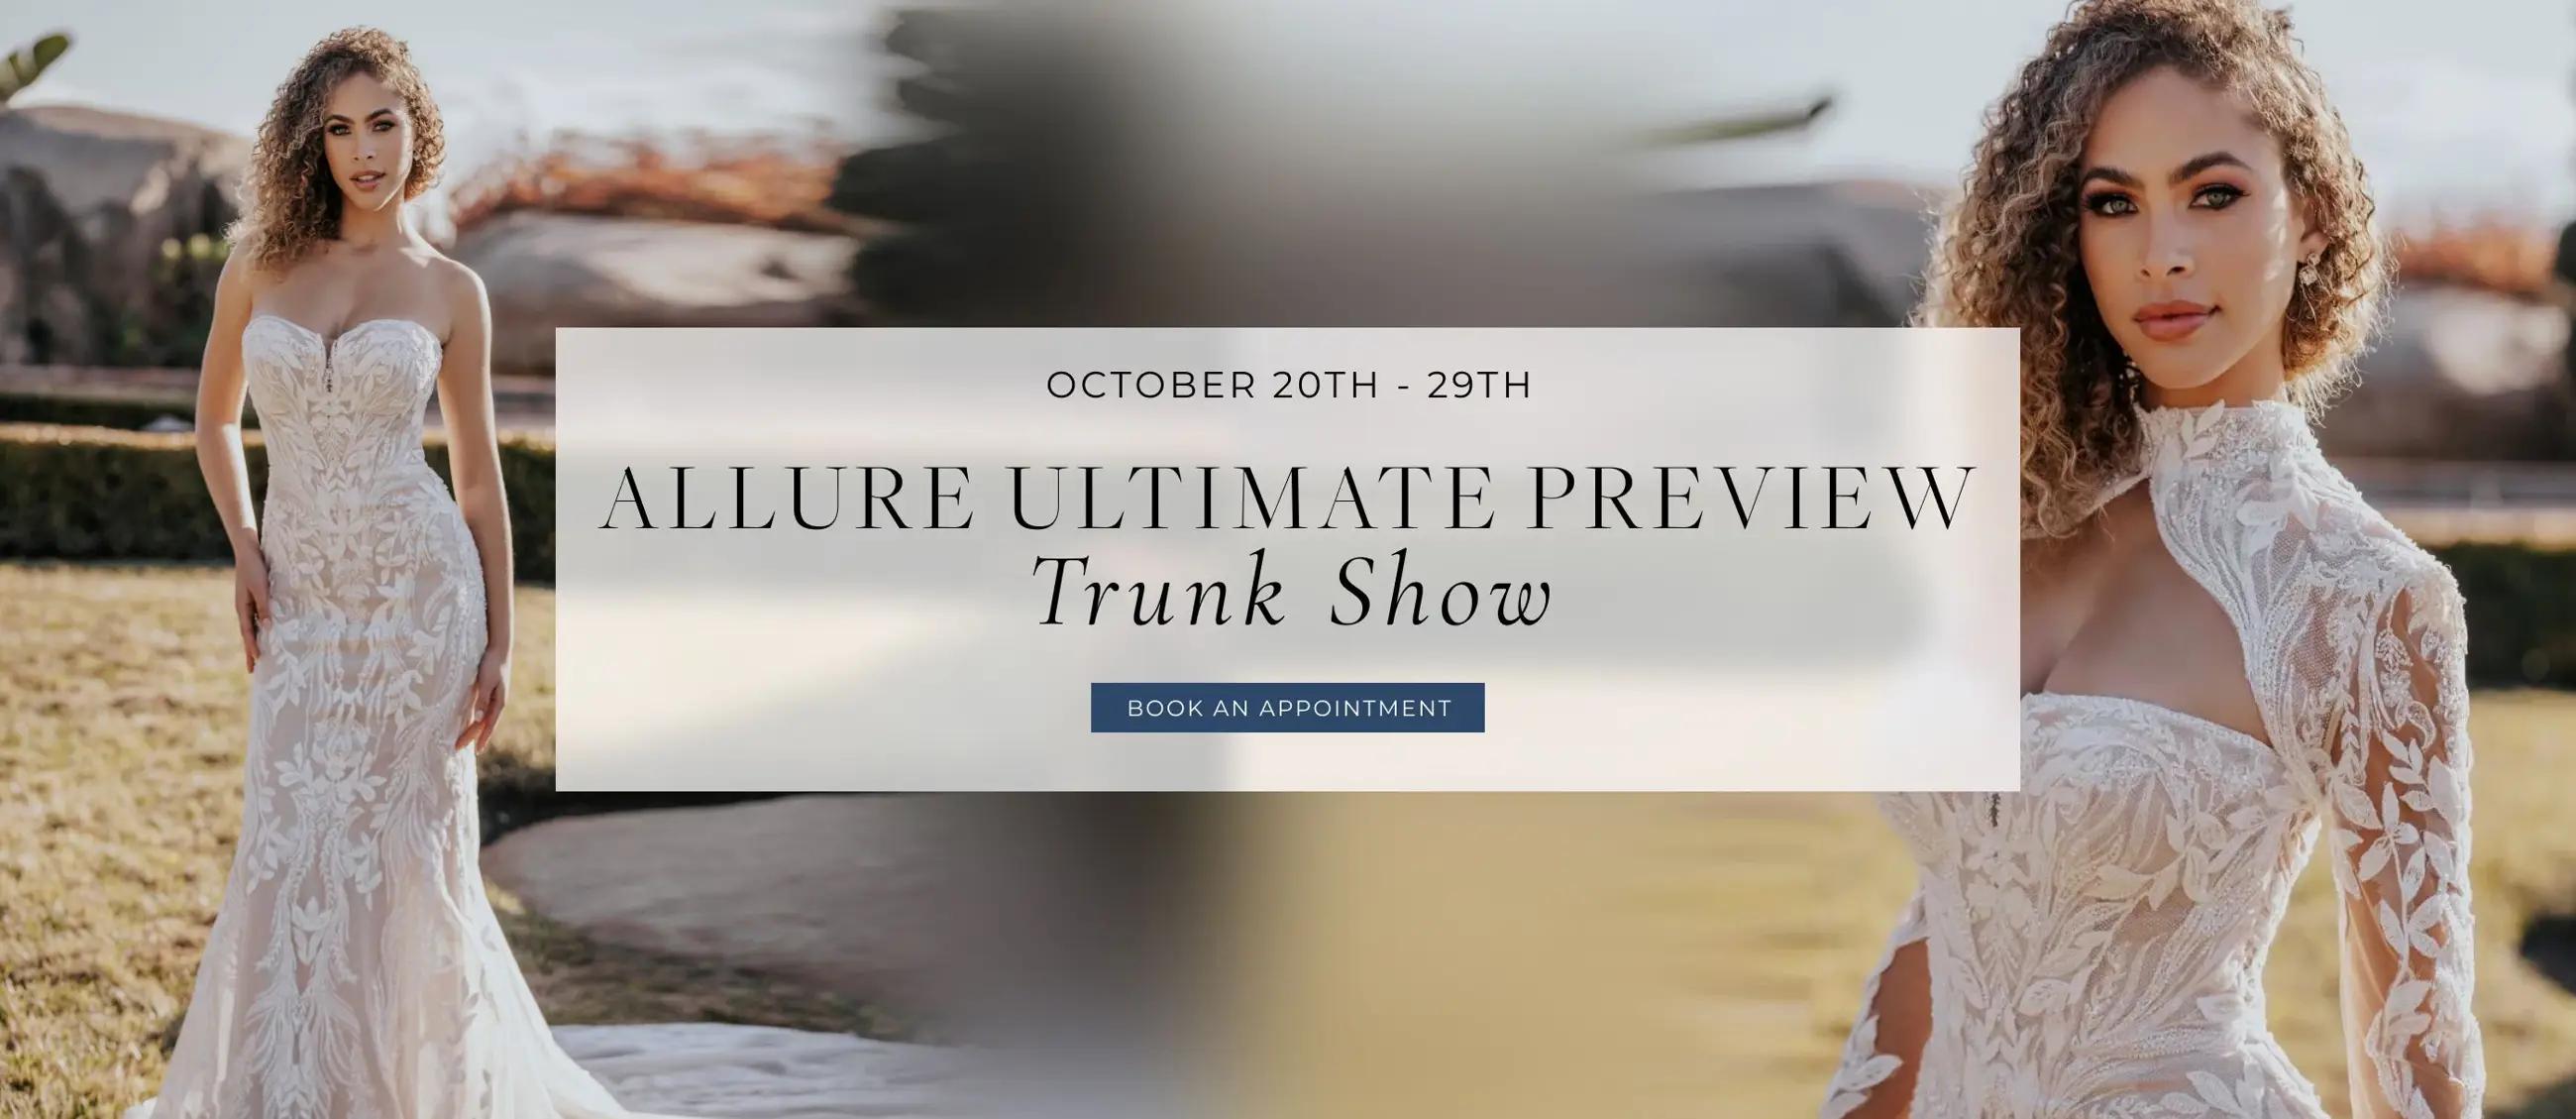 Allure Ultimate Preview Trunk Show event banner desktop